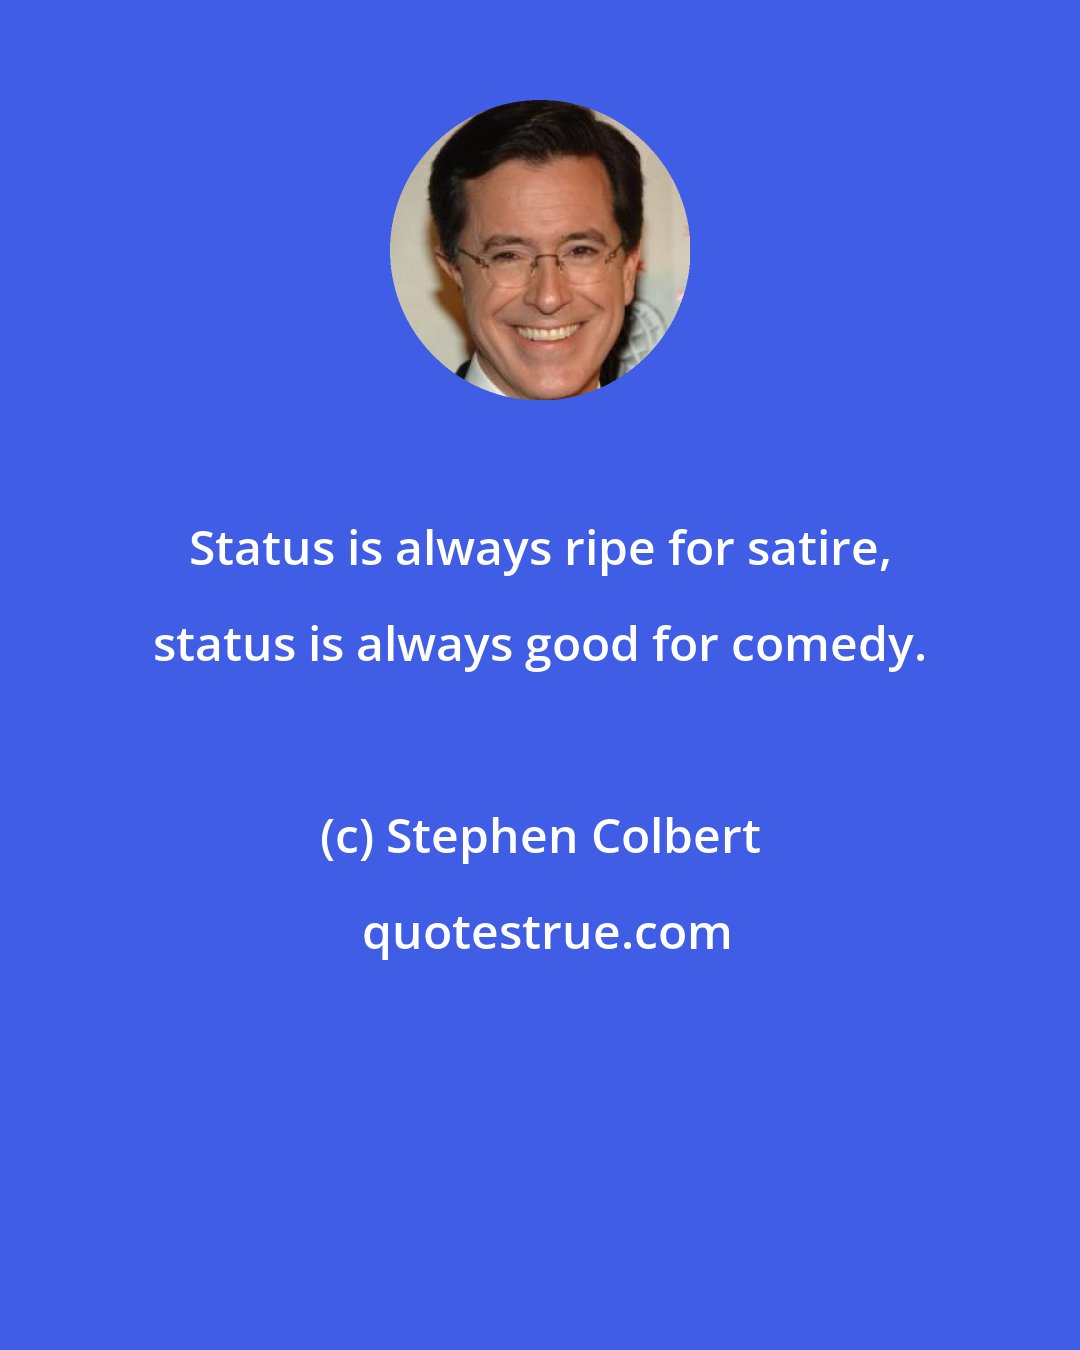 Stephen Colbert: Status is always ripe for satire, status is always good for comedy.